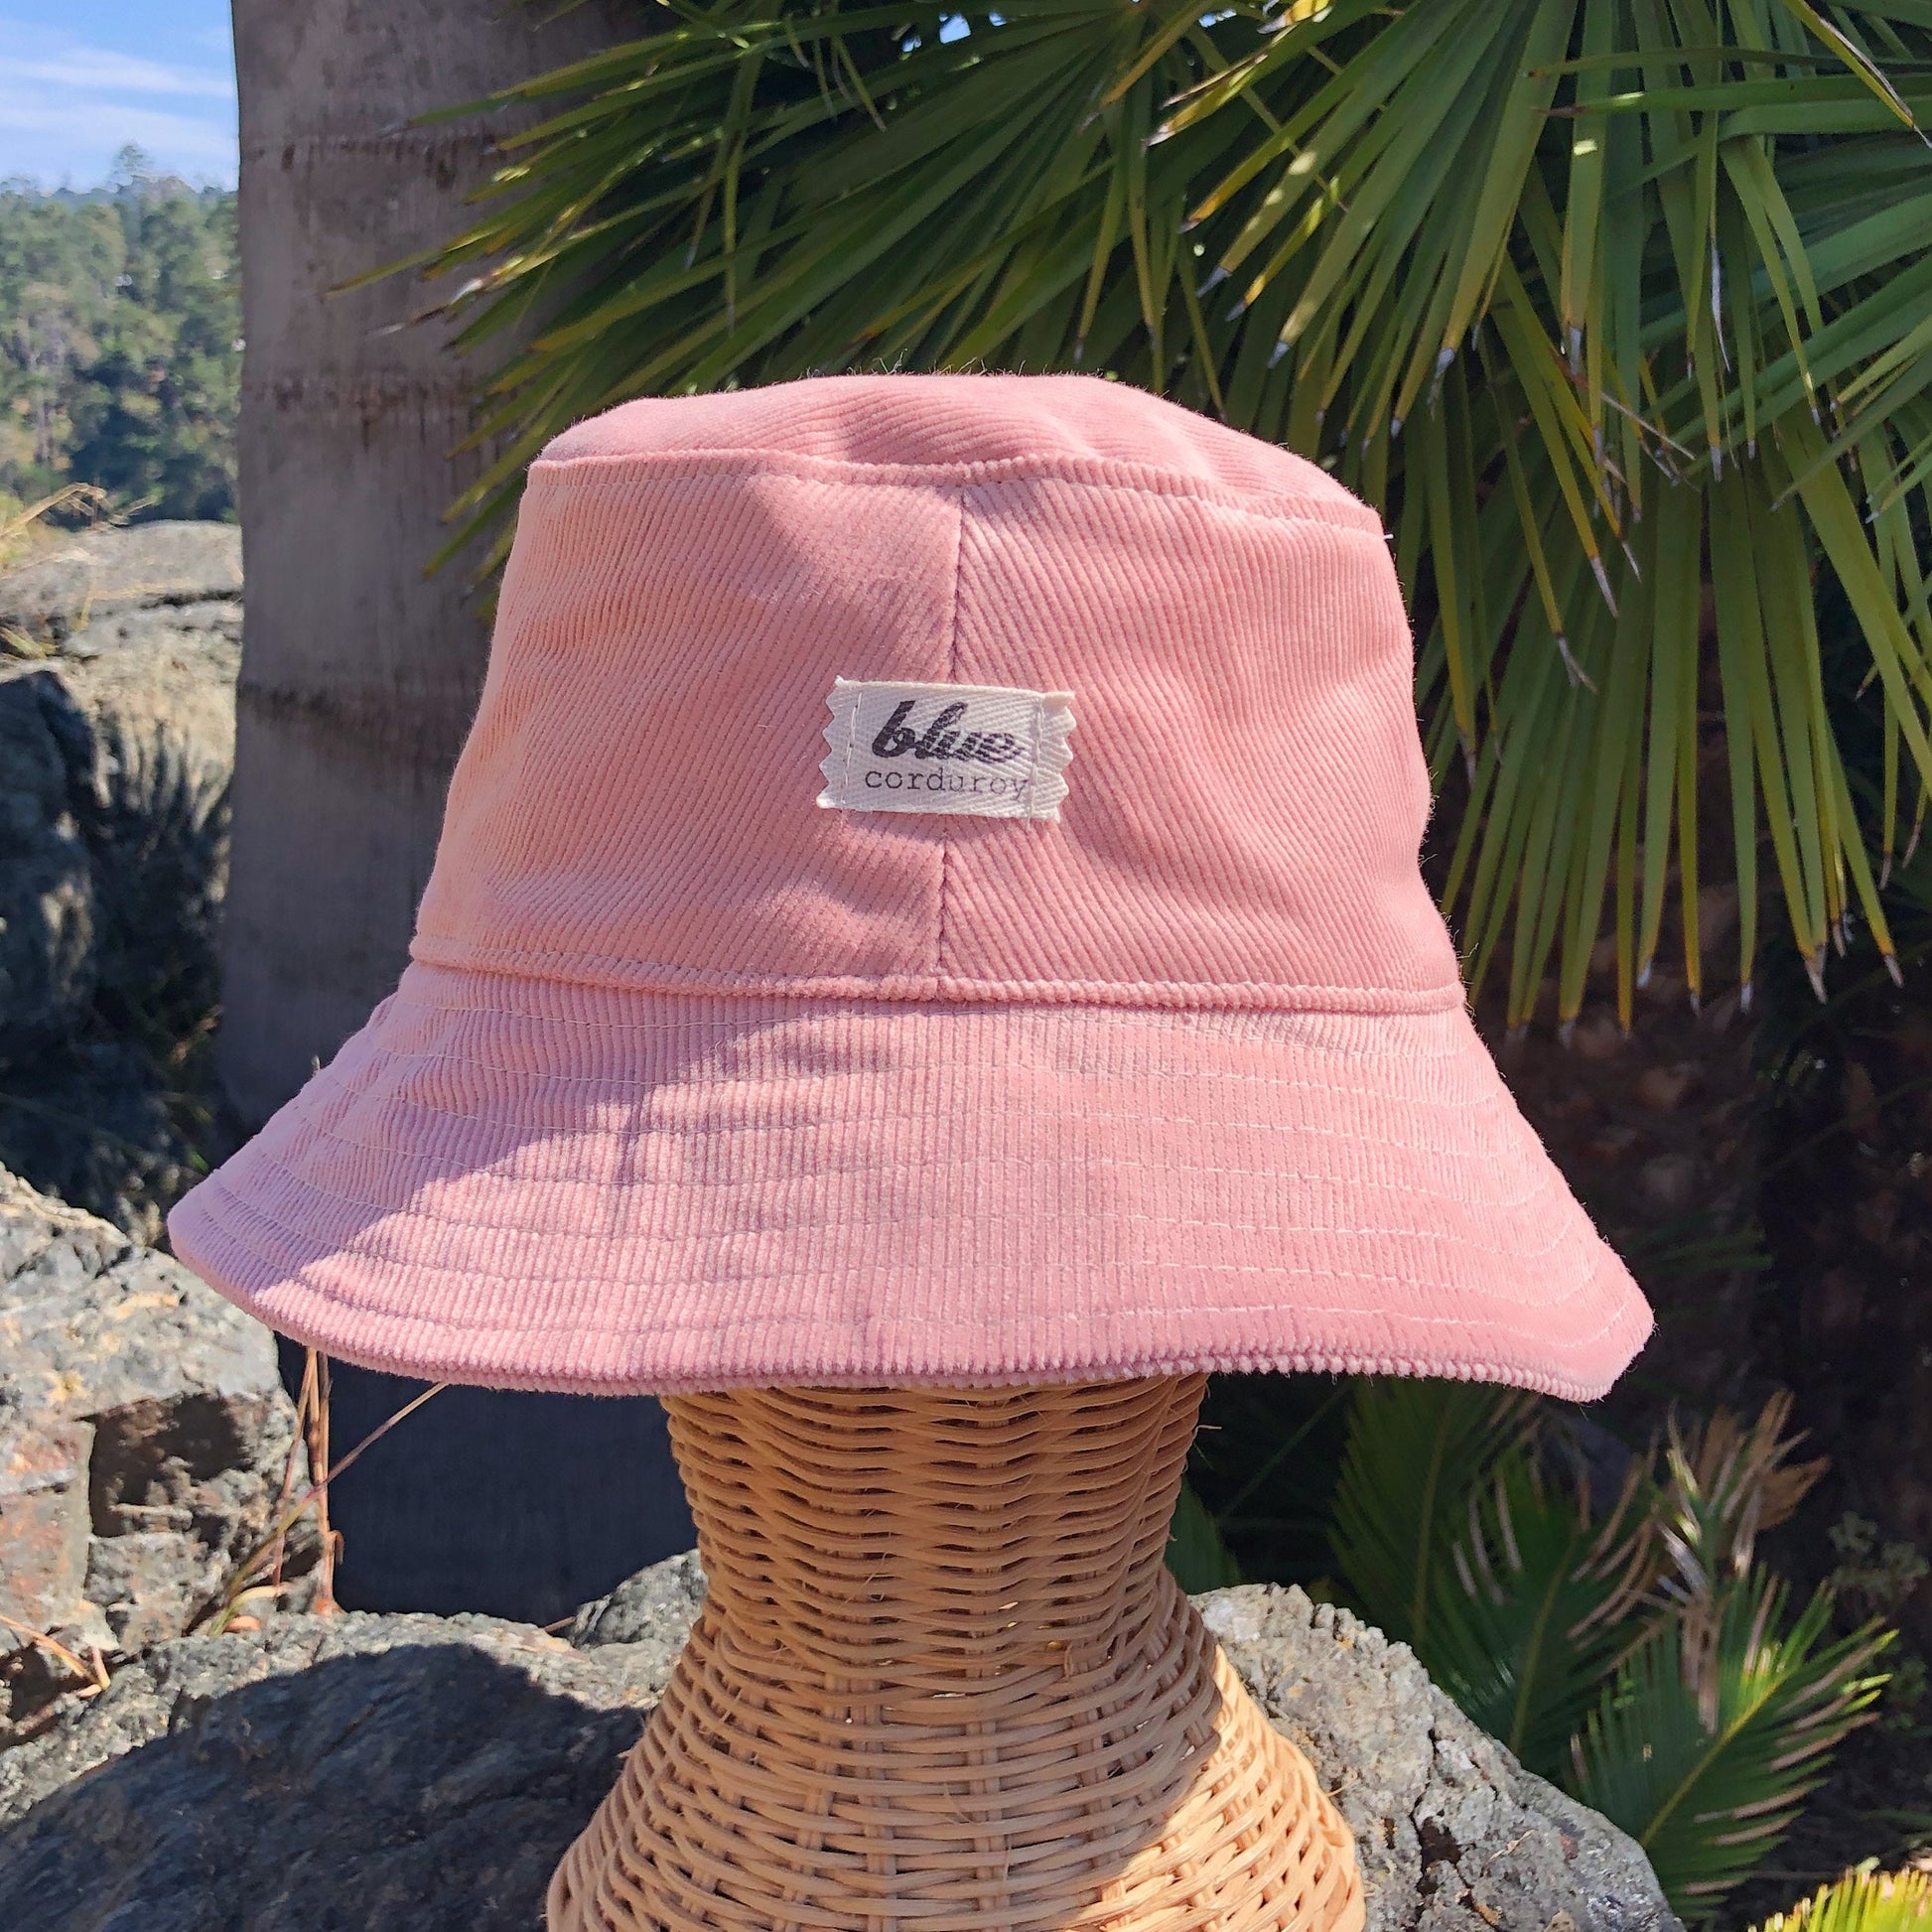 Pink corduroy bucket hat on blonde girl at beach.